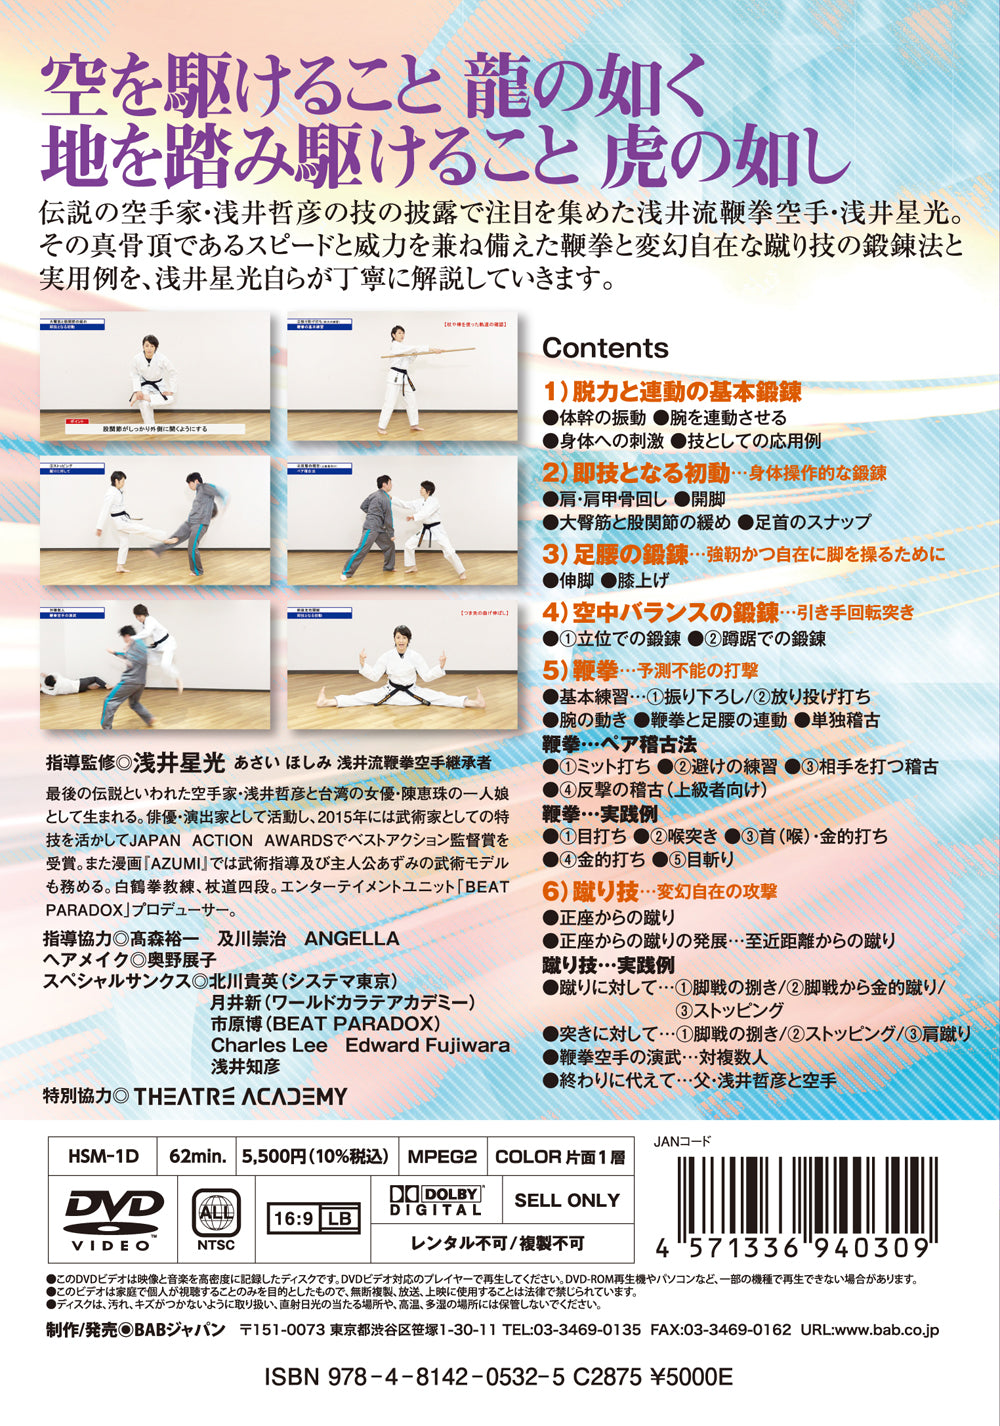 DVD de técnicas de karate increíbles e inusuales de Hoshimi Asai